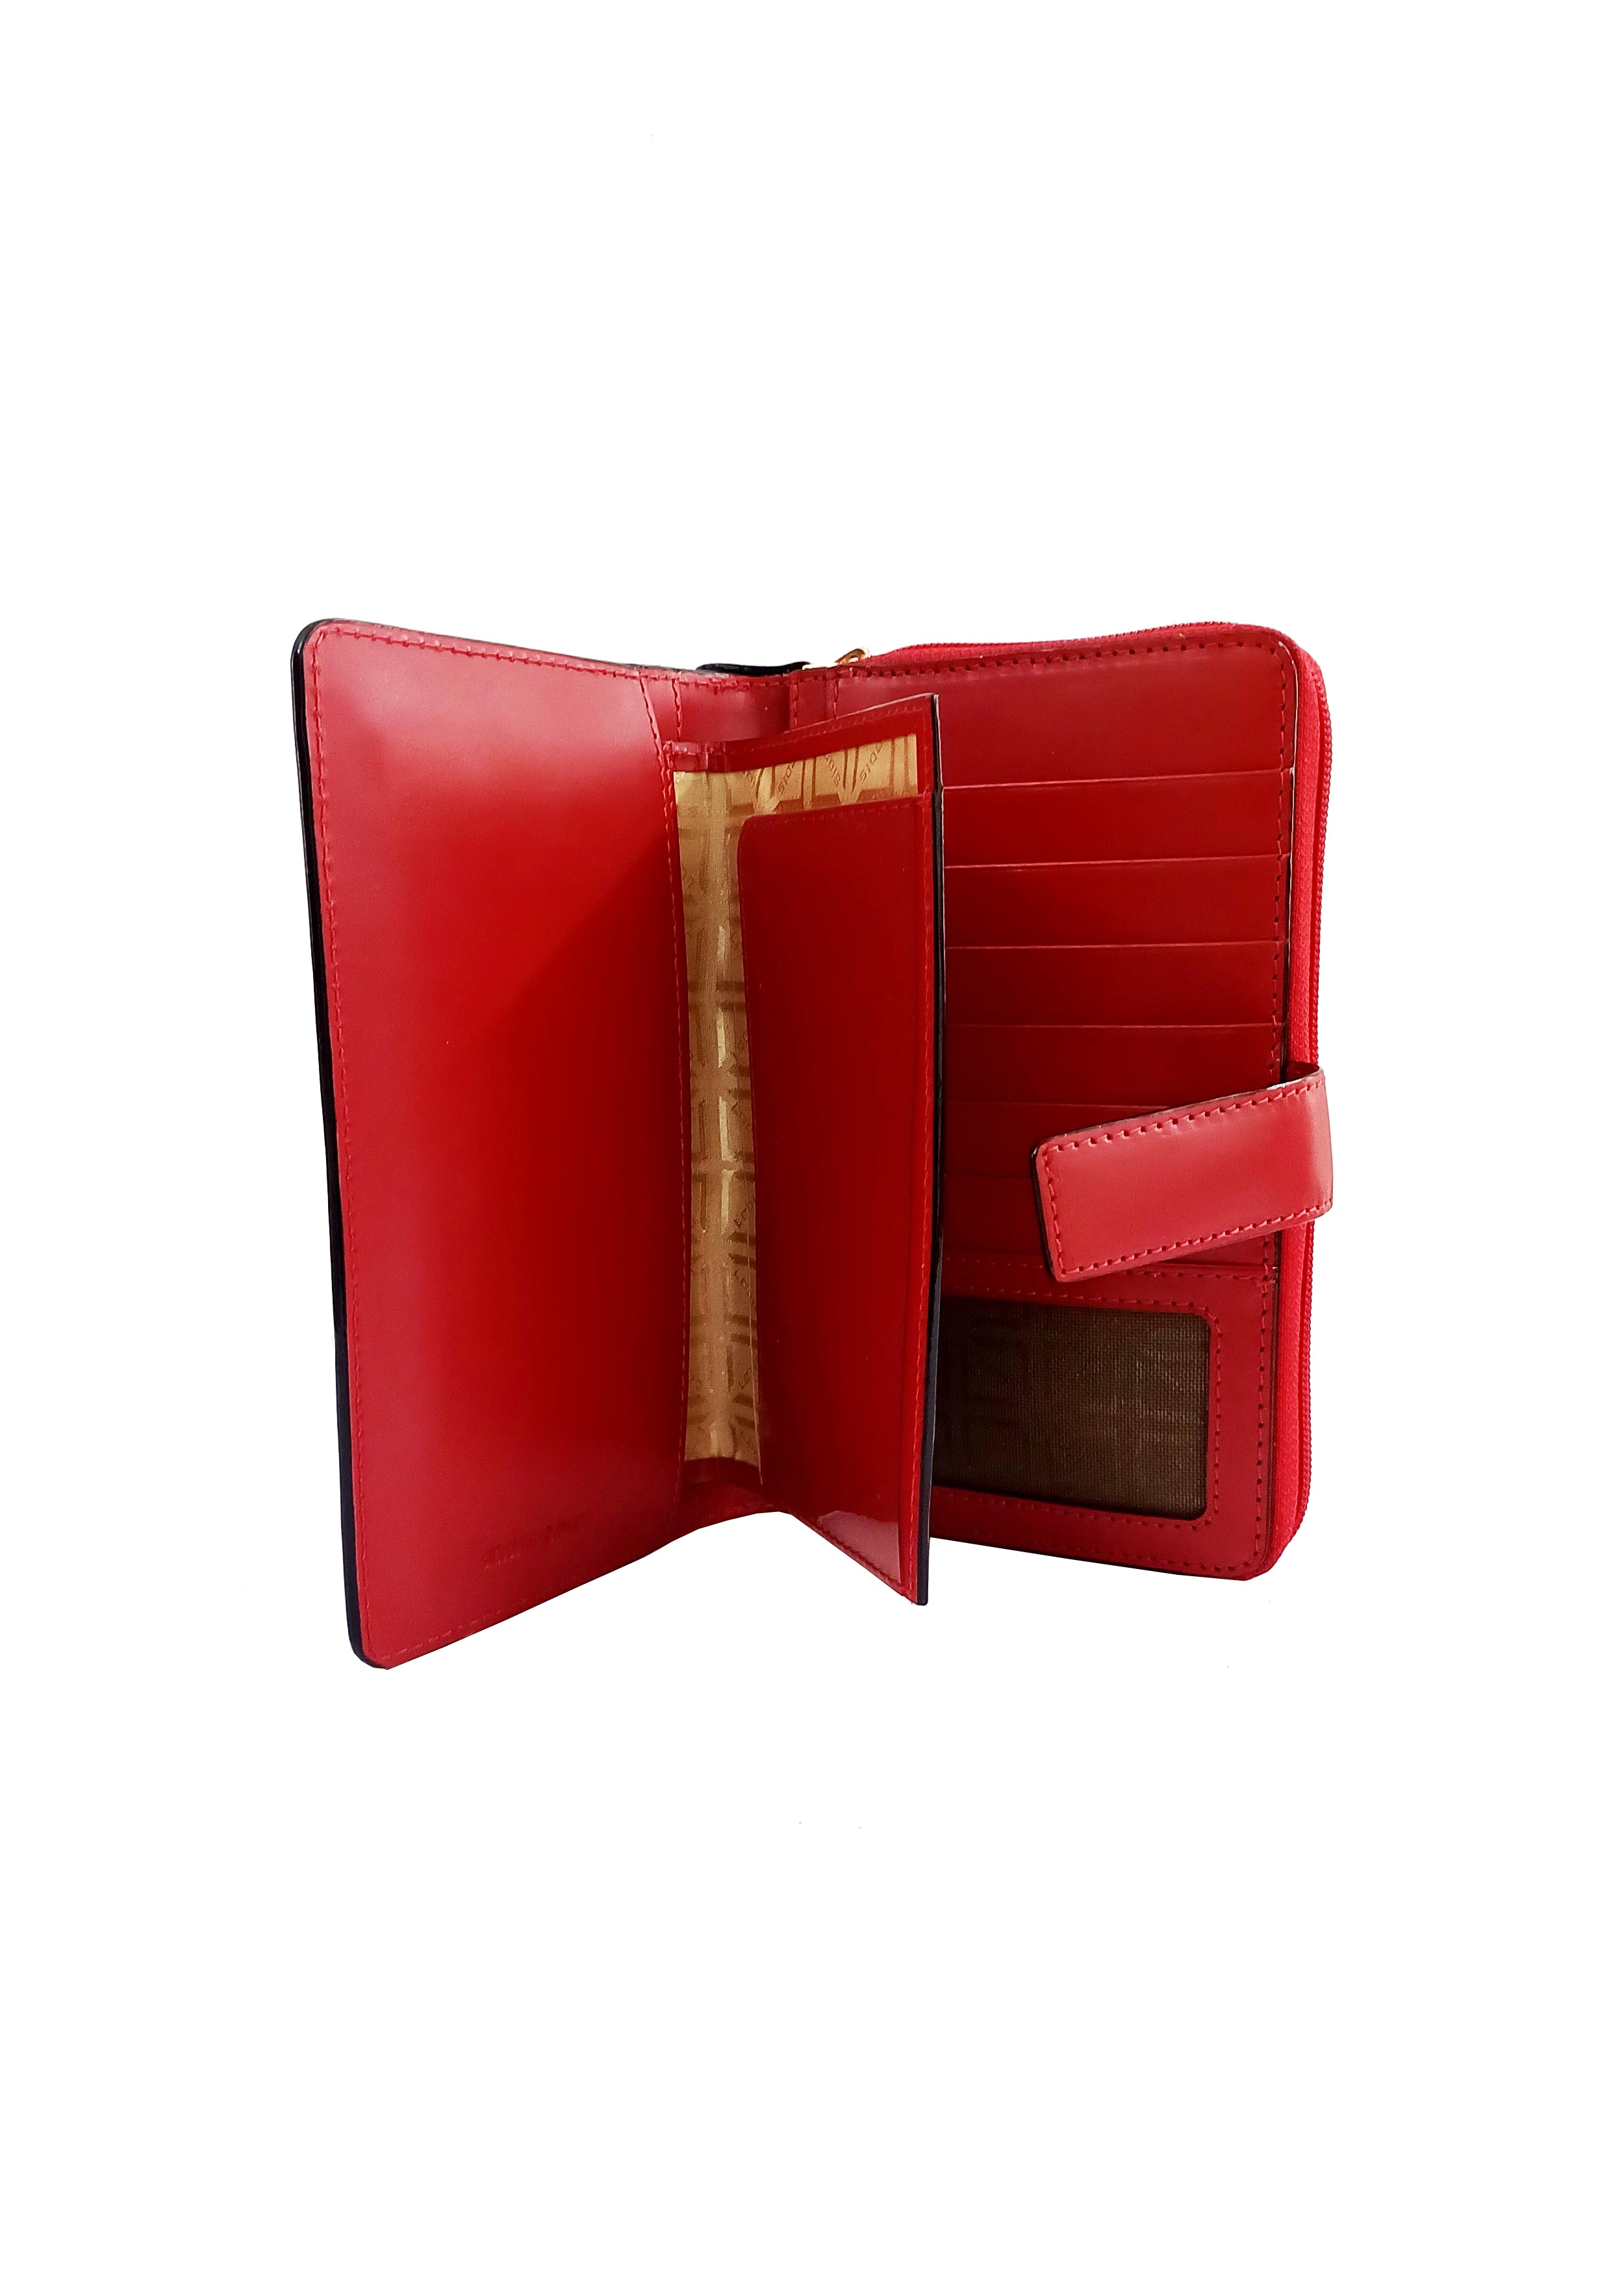 Shop All-Time Favorite Audrey Leather Wallet | Lodis